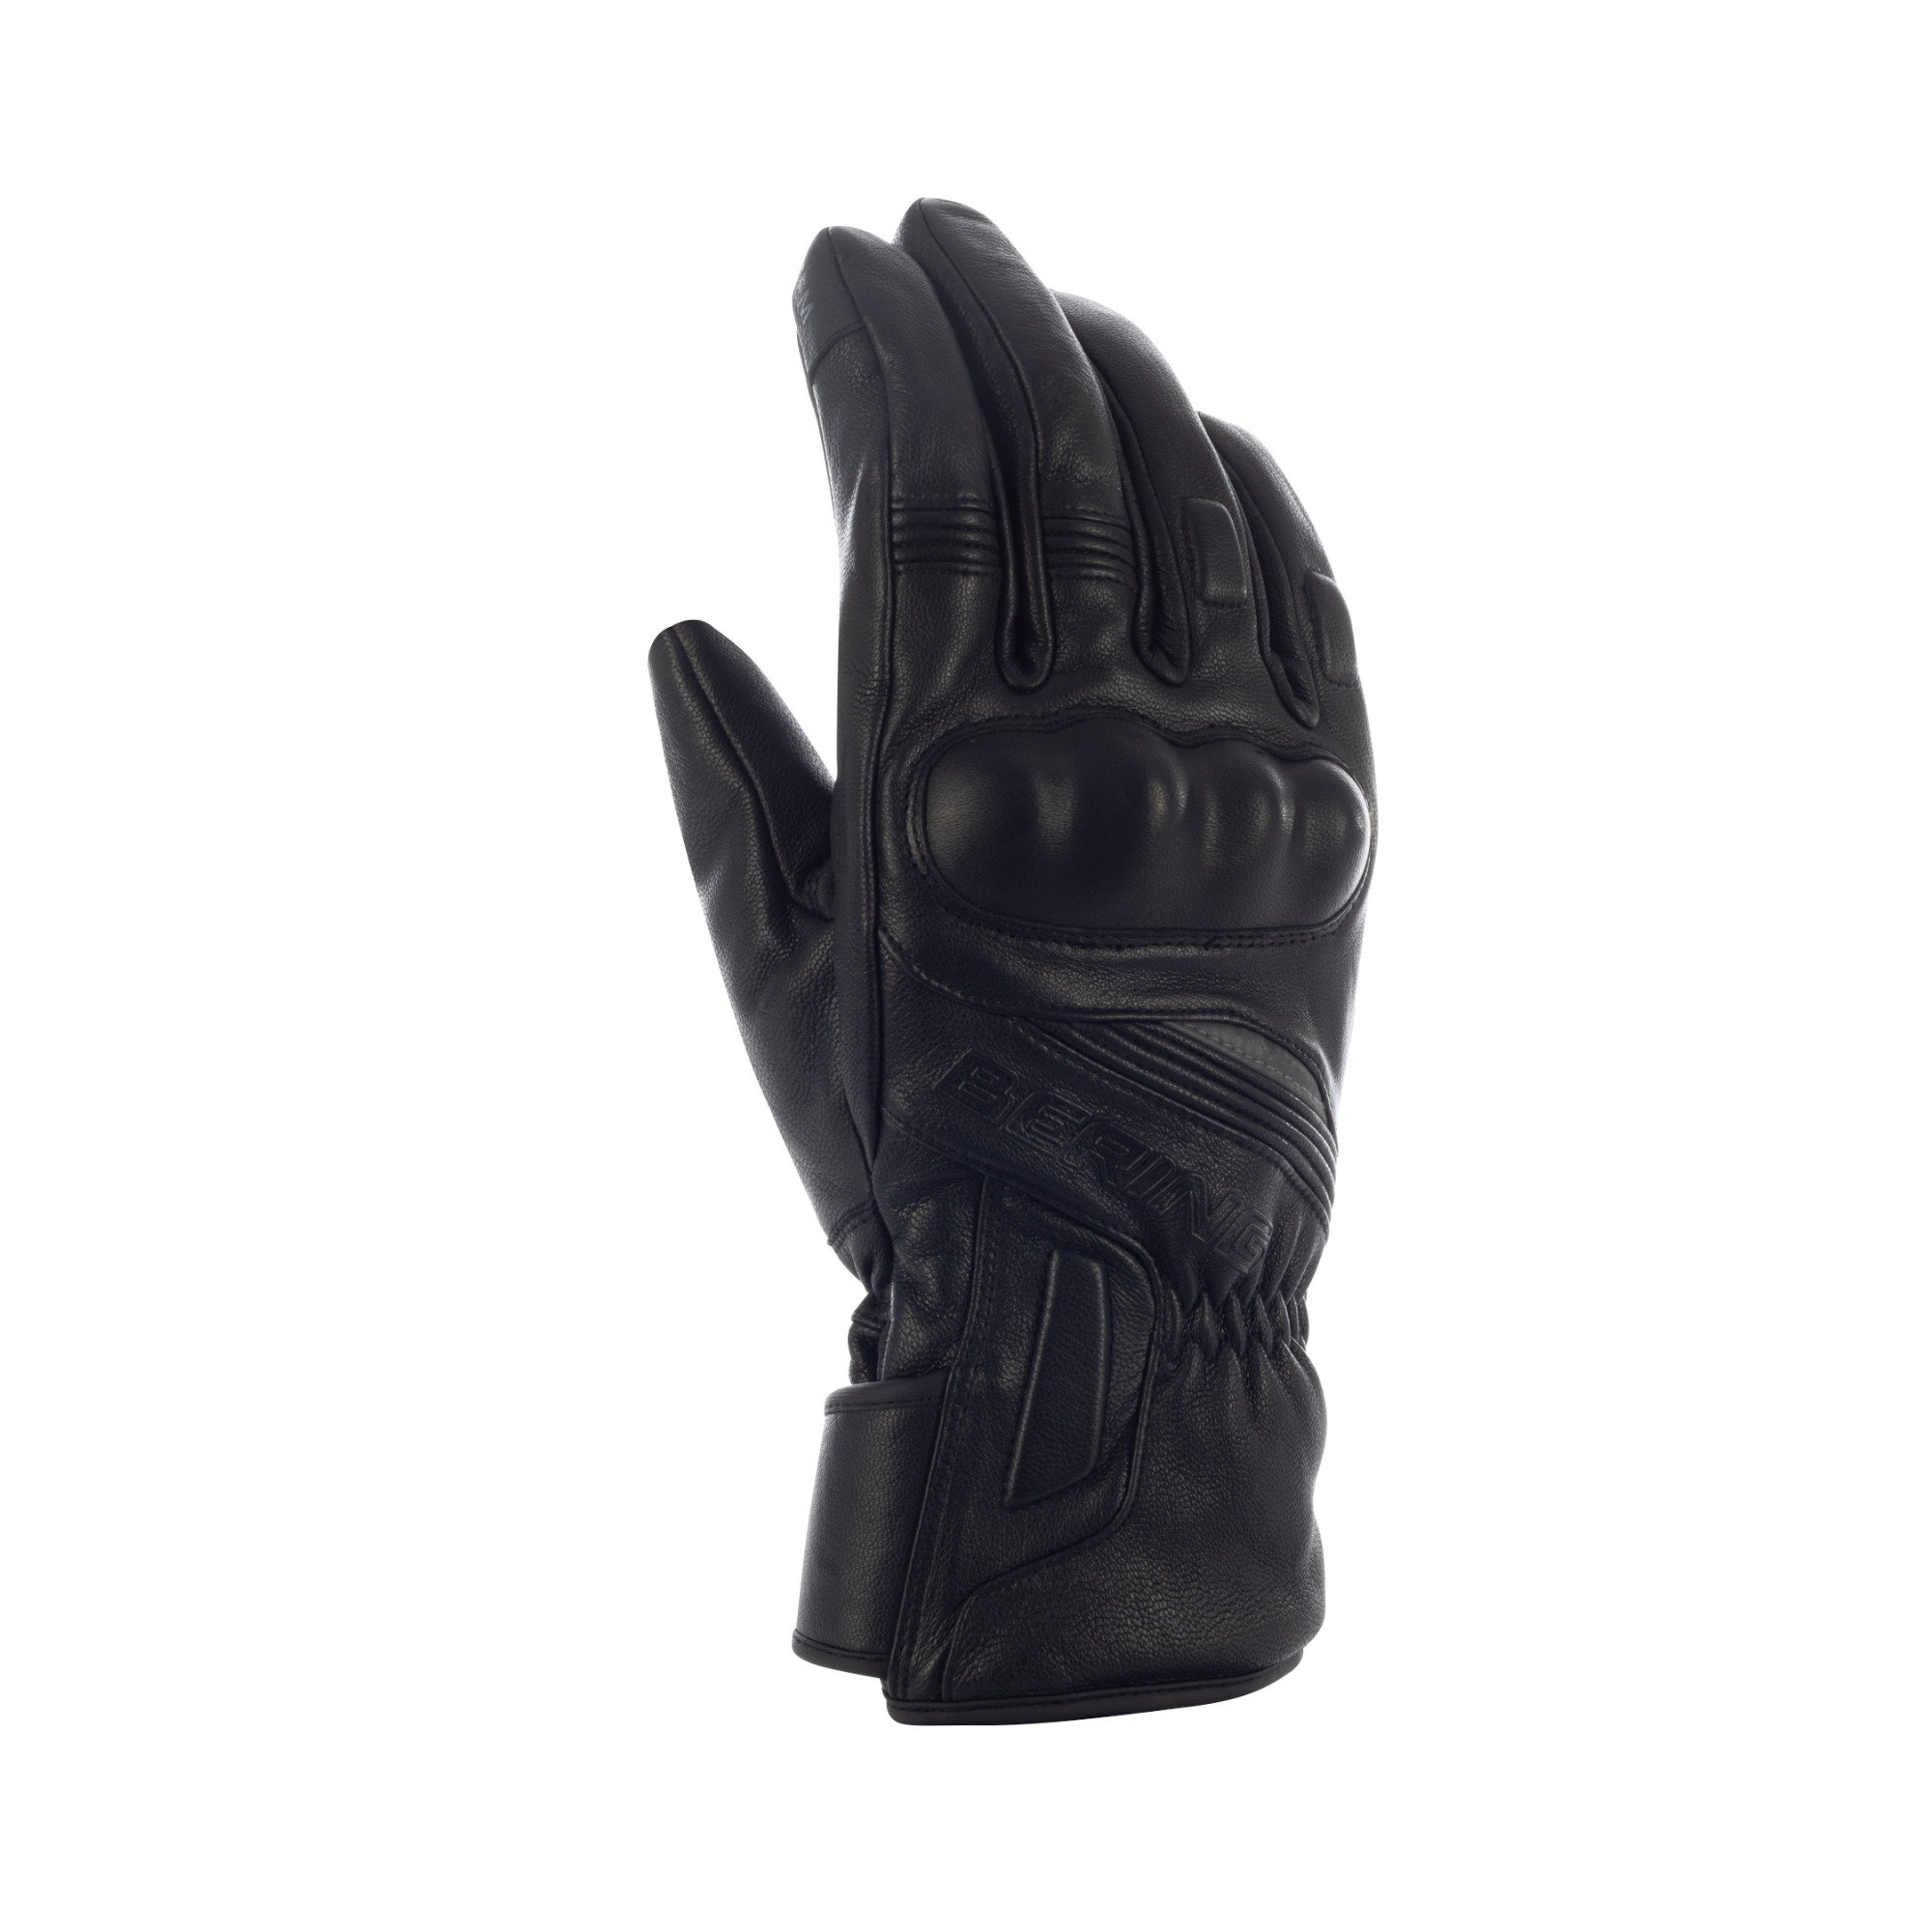 Image of Bering Stryker Gloves Black Size T11 ID 3660815172018